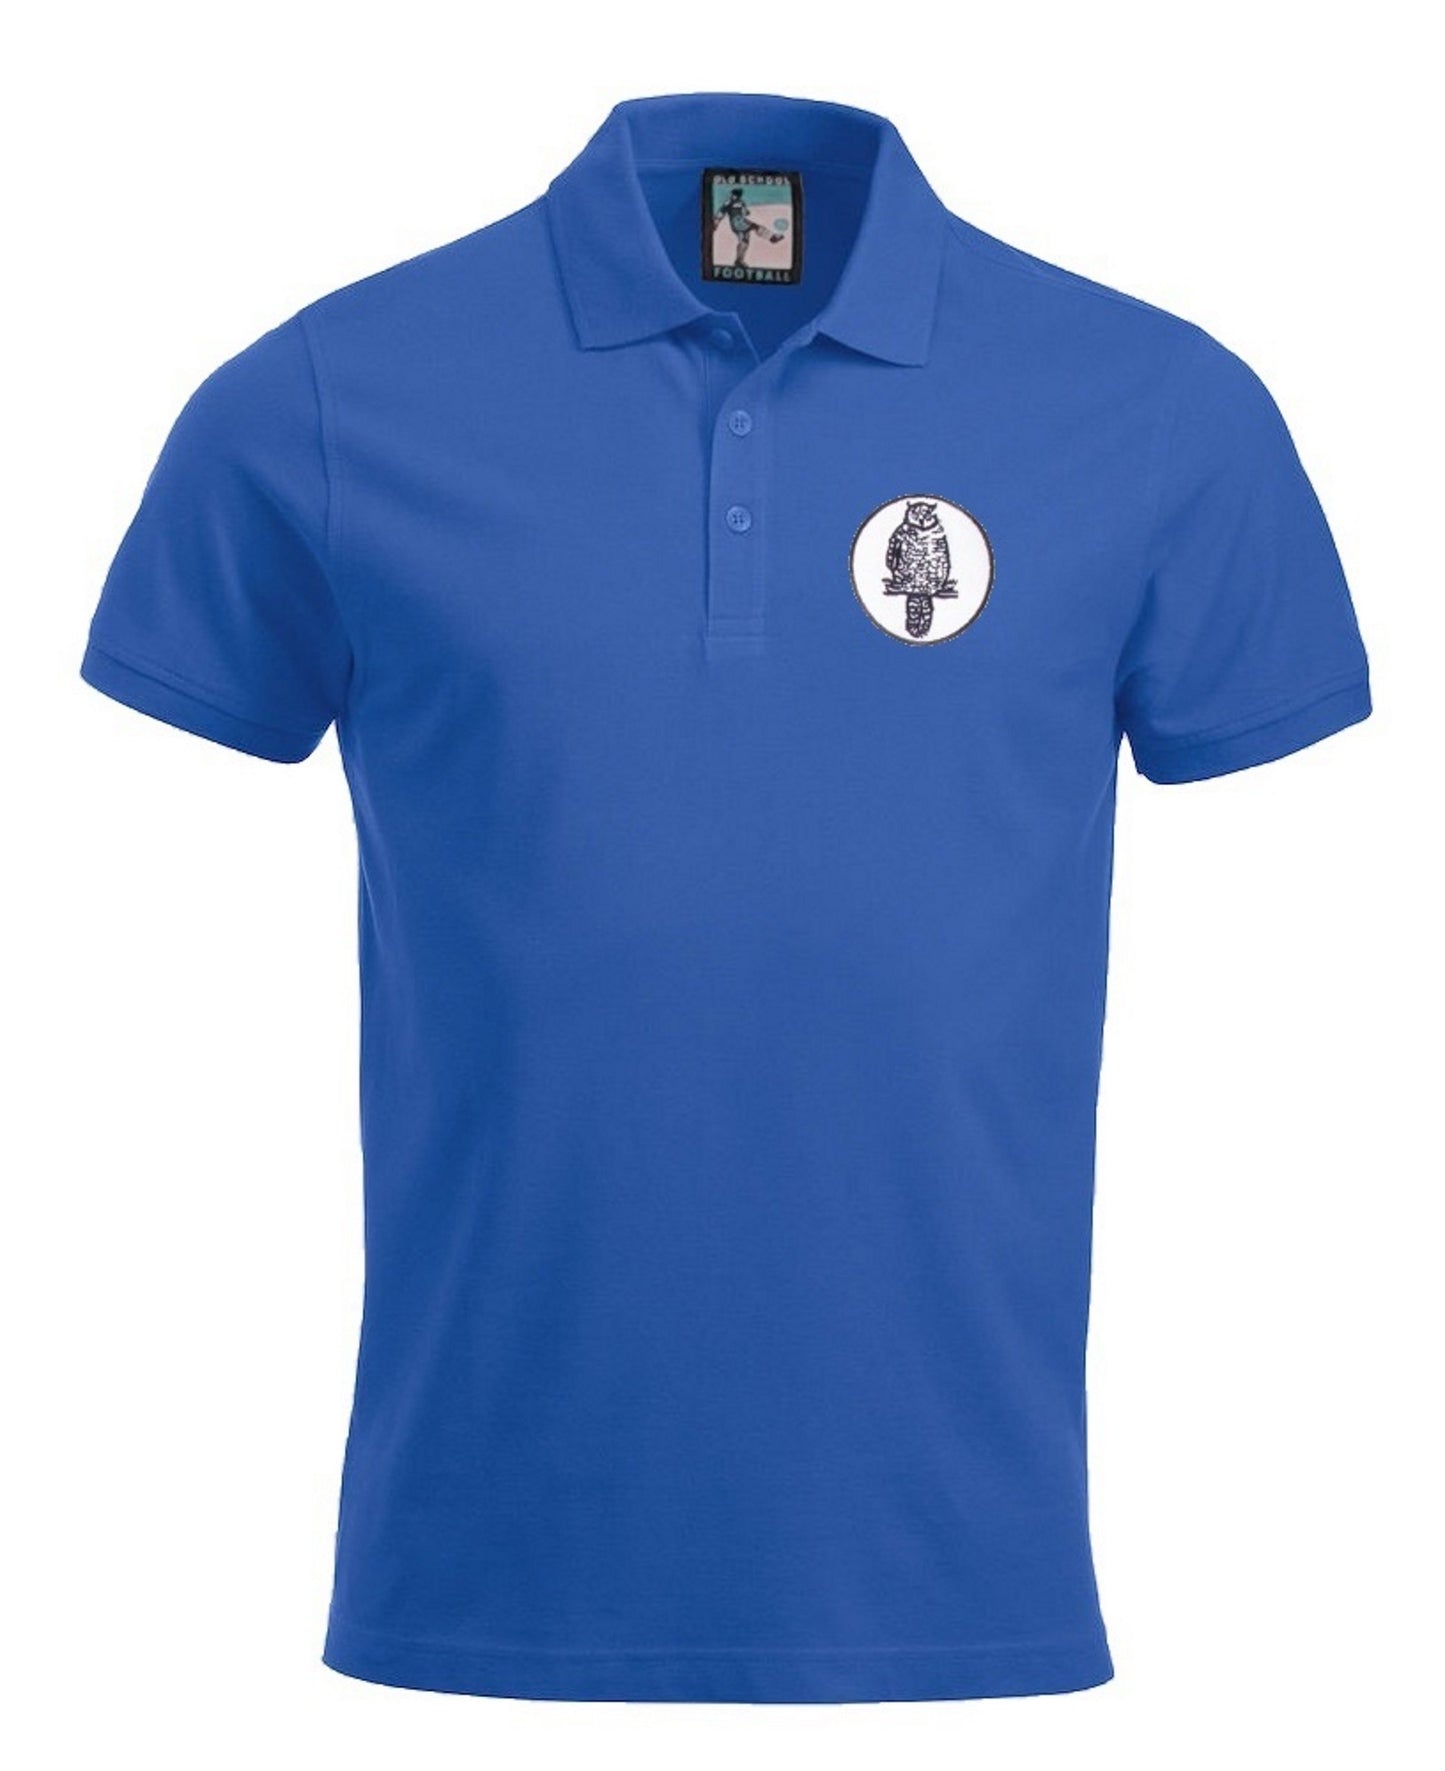 Leeds United Retro Football Polo Shirt 1960s - Polo